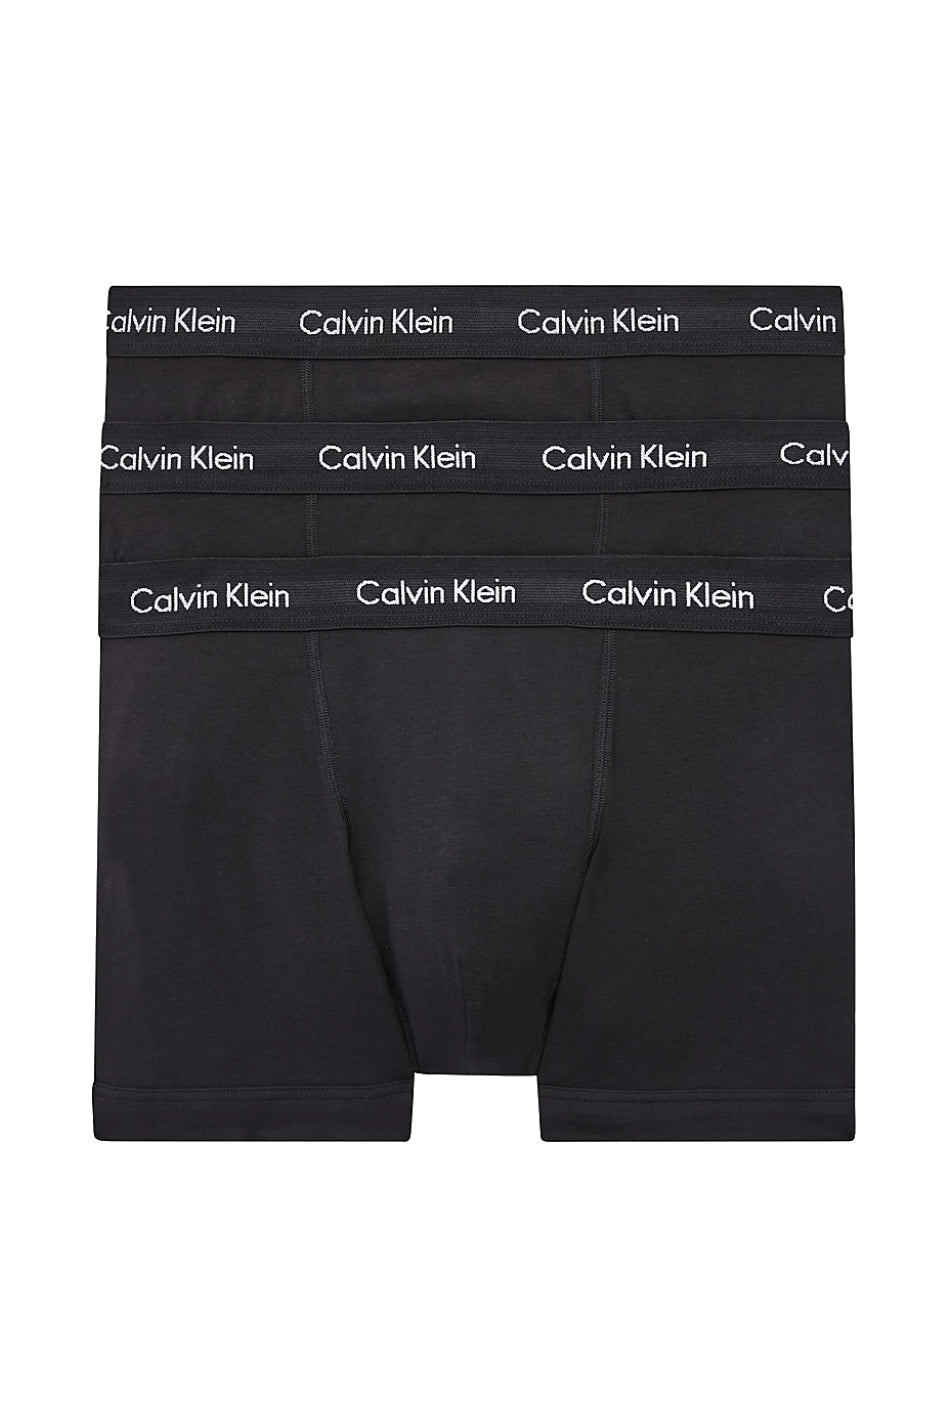 Calvin Klein Big & Tall 3 Pack Men's Cotton Stretch Trunk